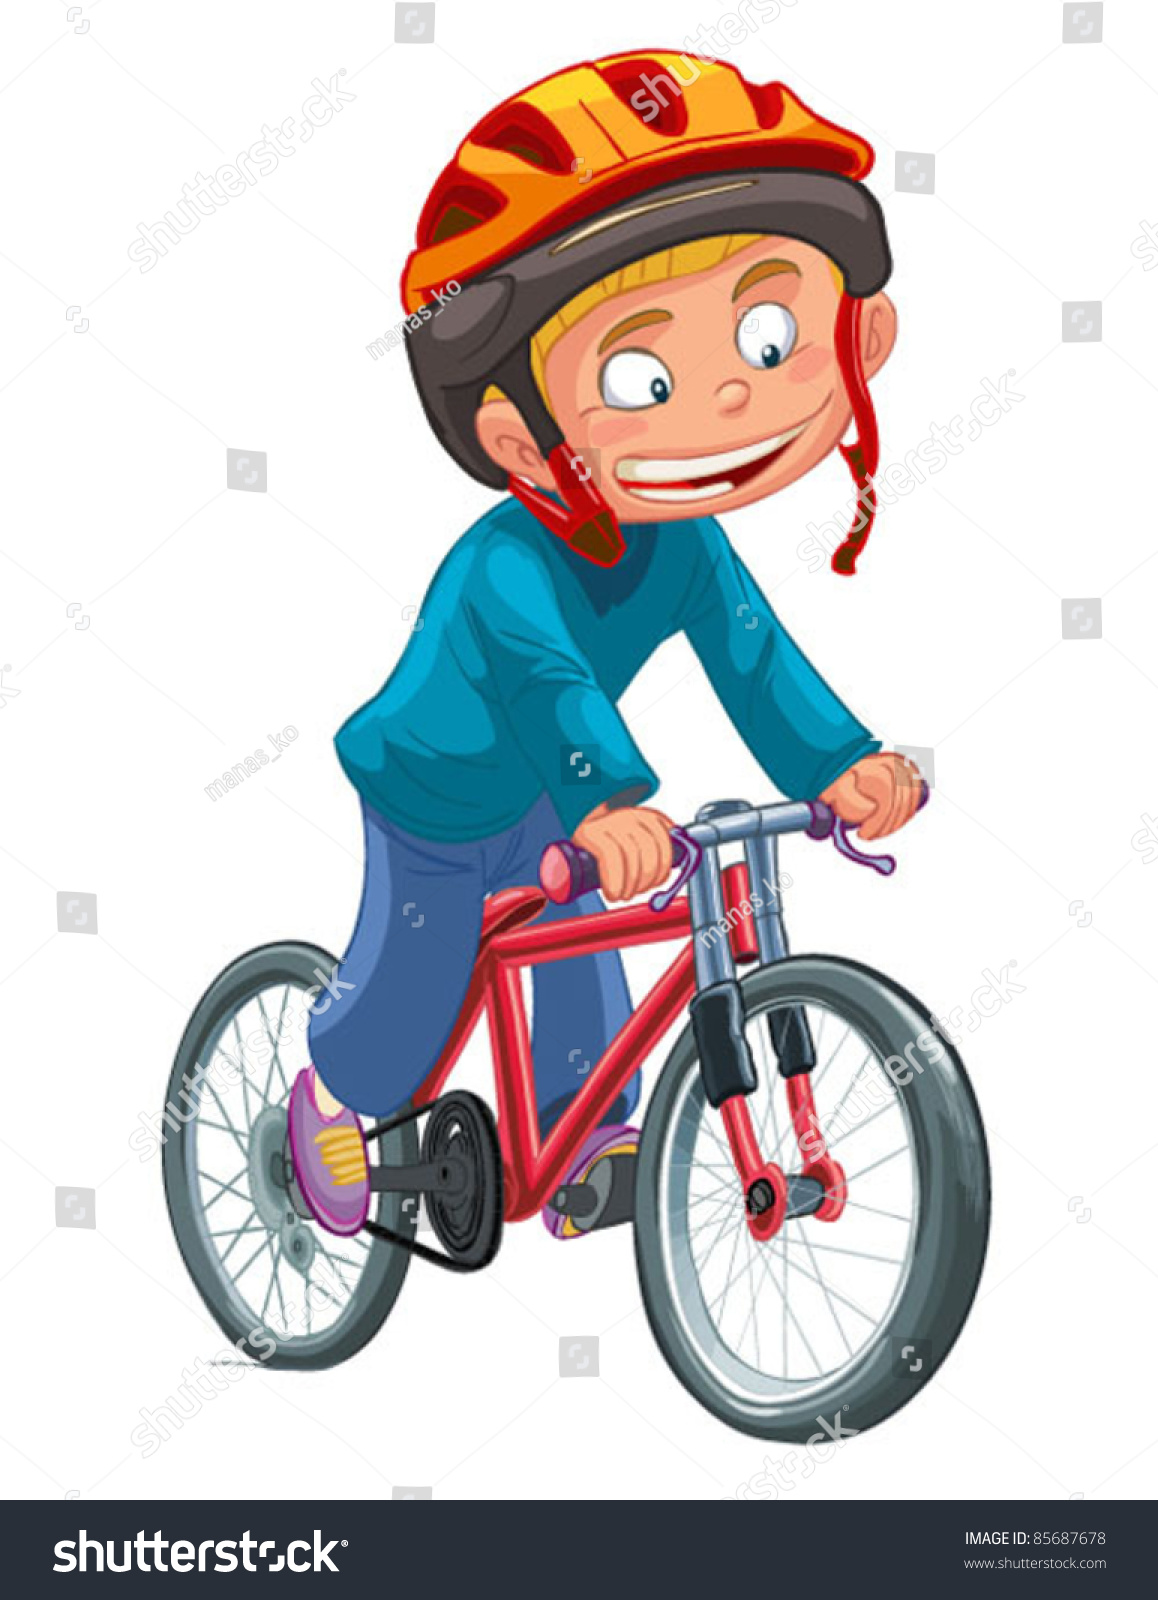 boy riding a bike clipart - photo #24